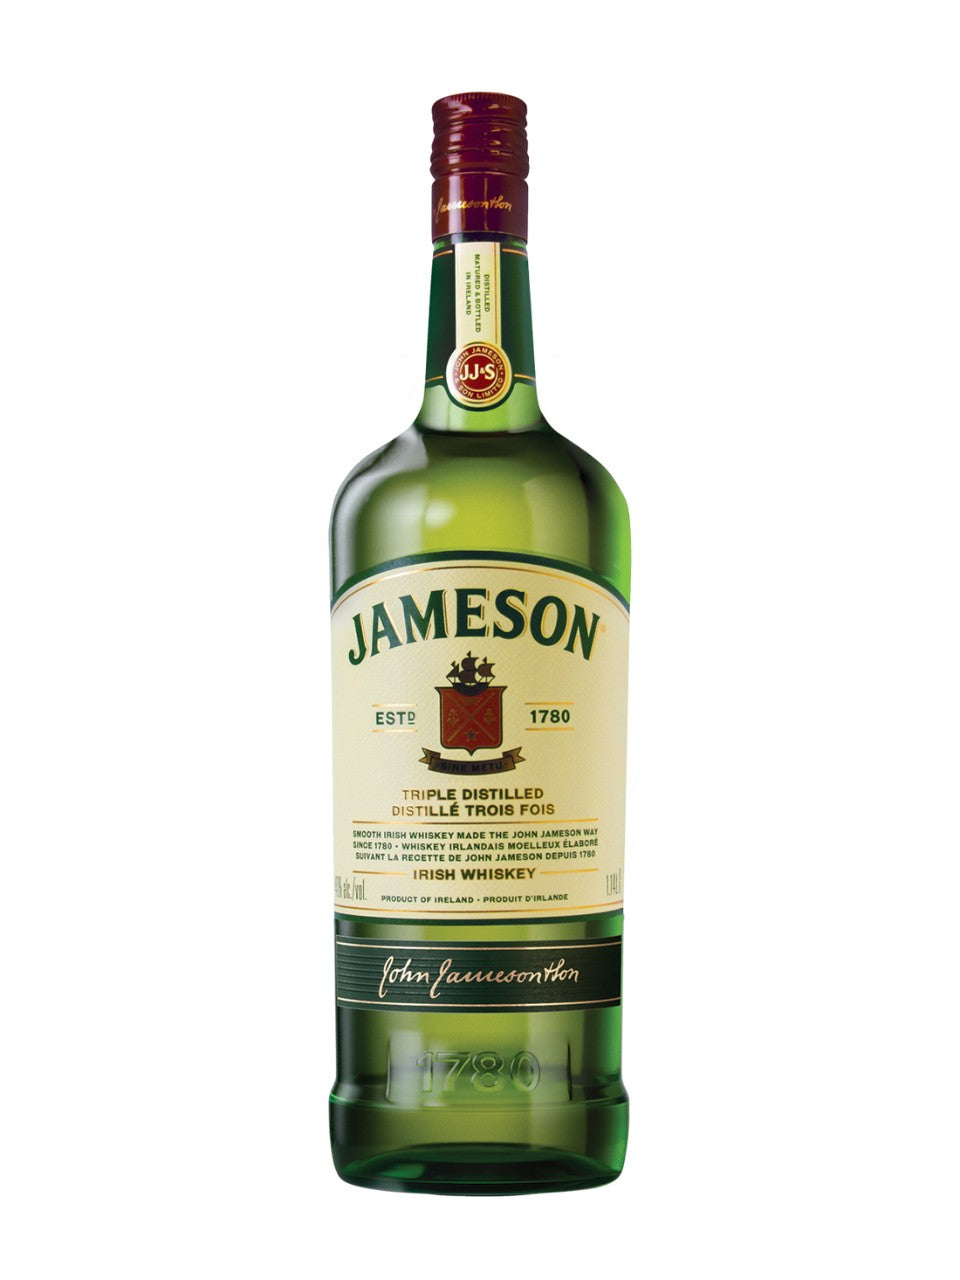 Jameson Irish Whiskey 1140 mL bottle